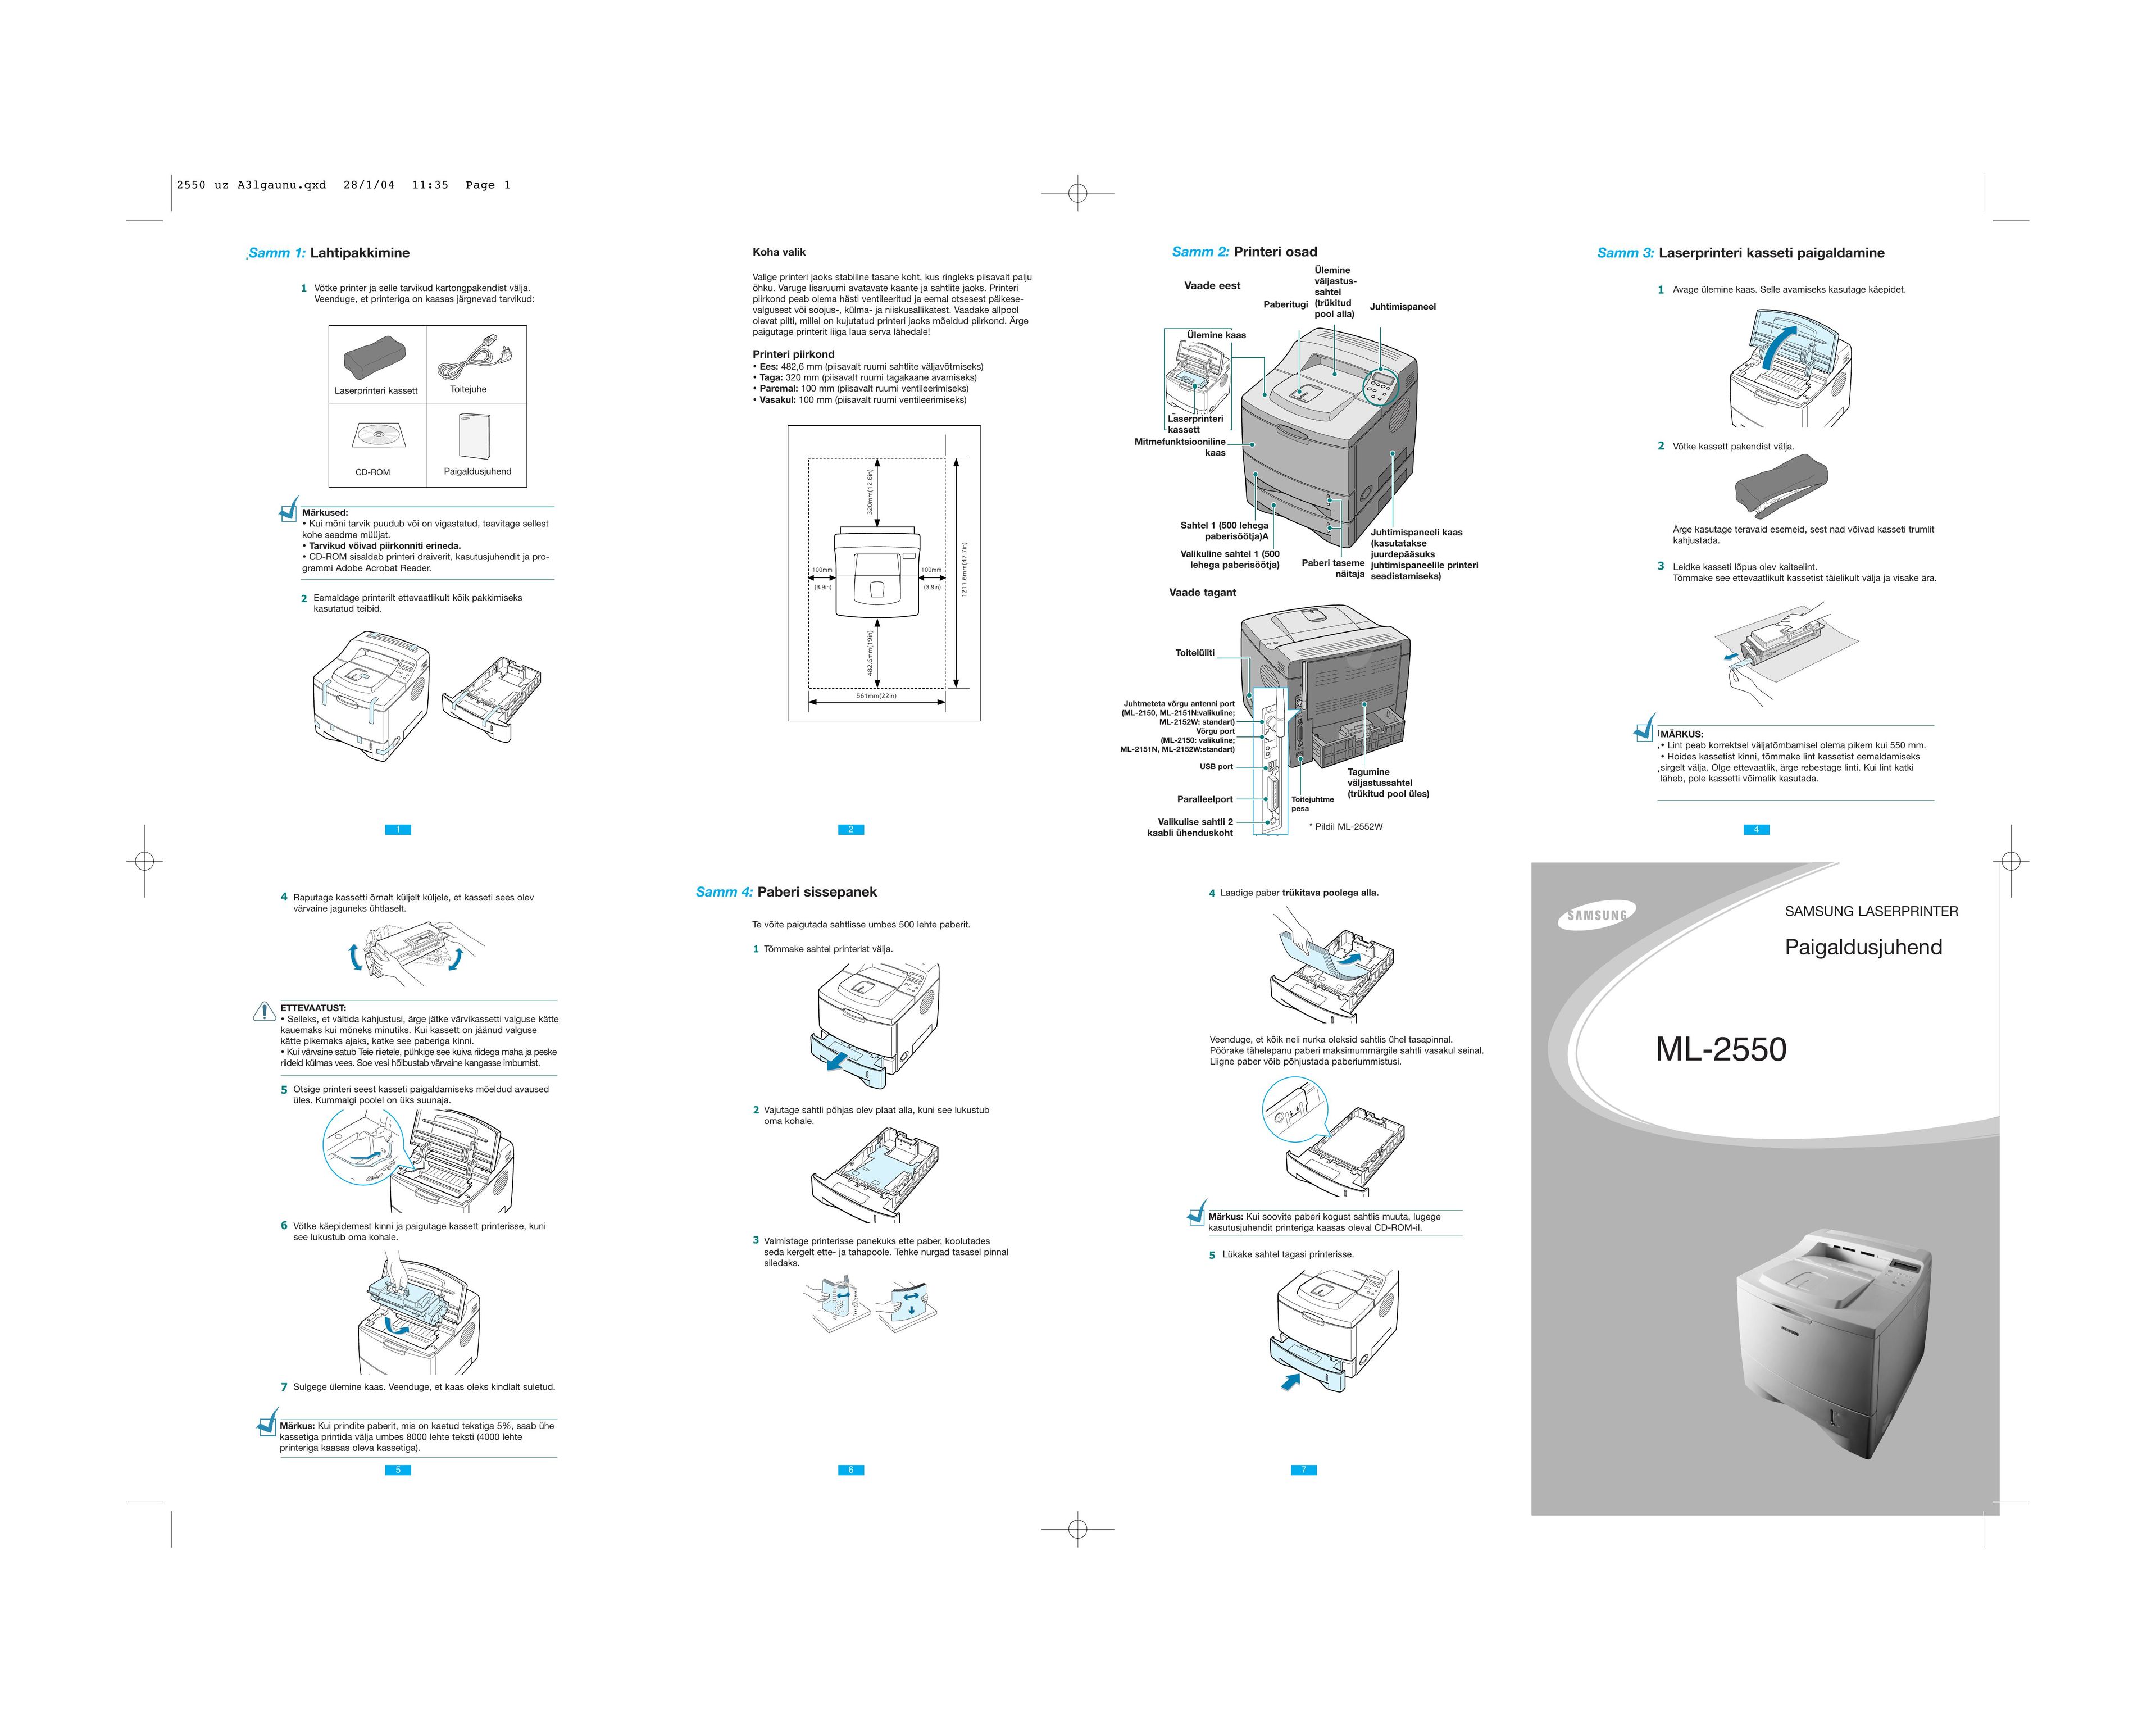 Samsung 2150 Printer User Manual